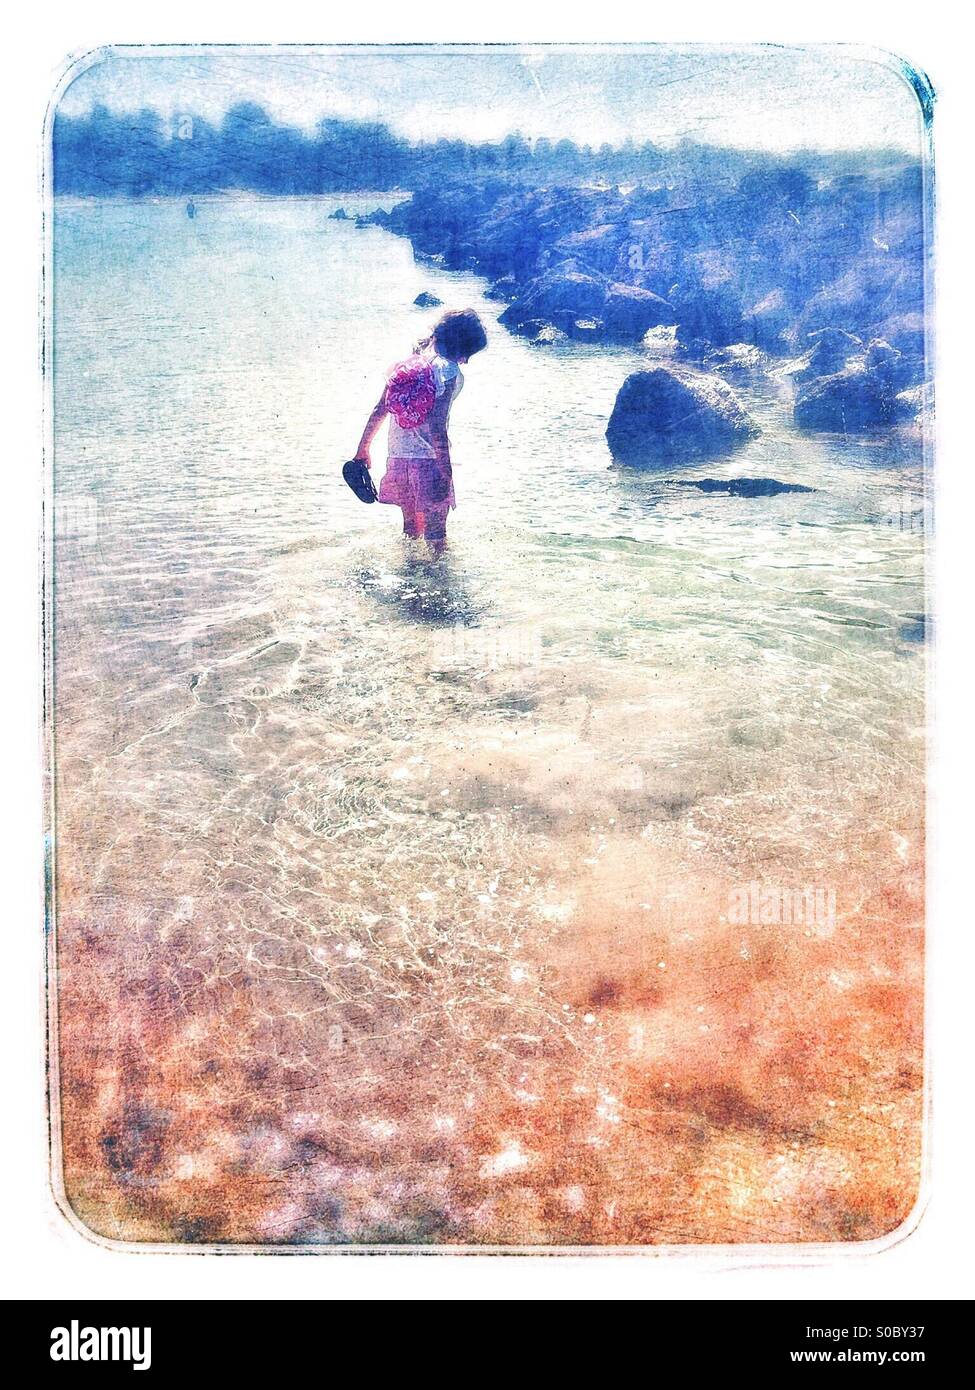 Summer dreaming - girl exploring shallows at the beach Stock Photo